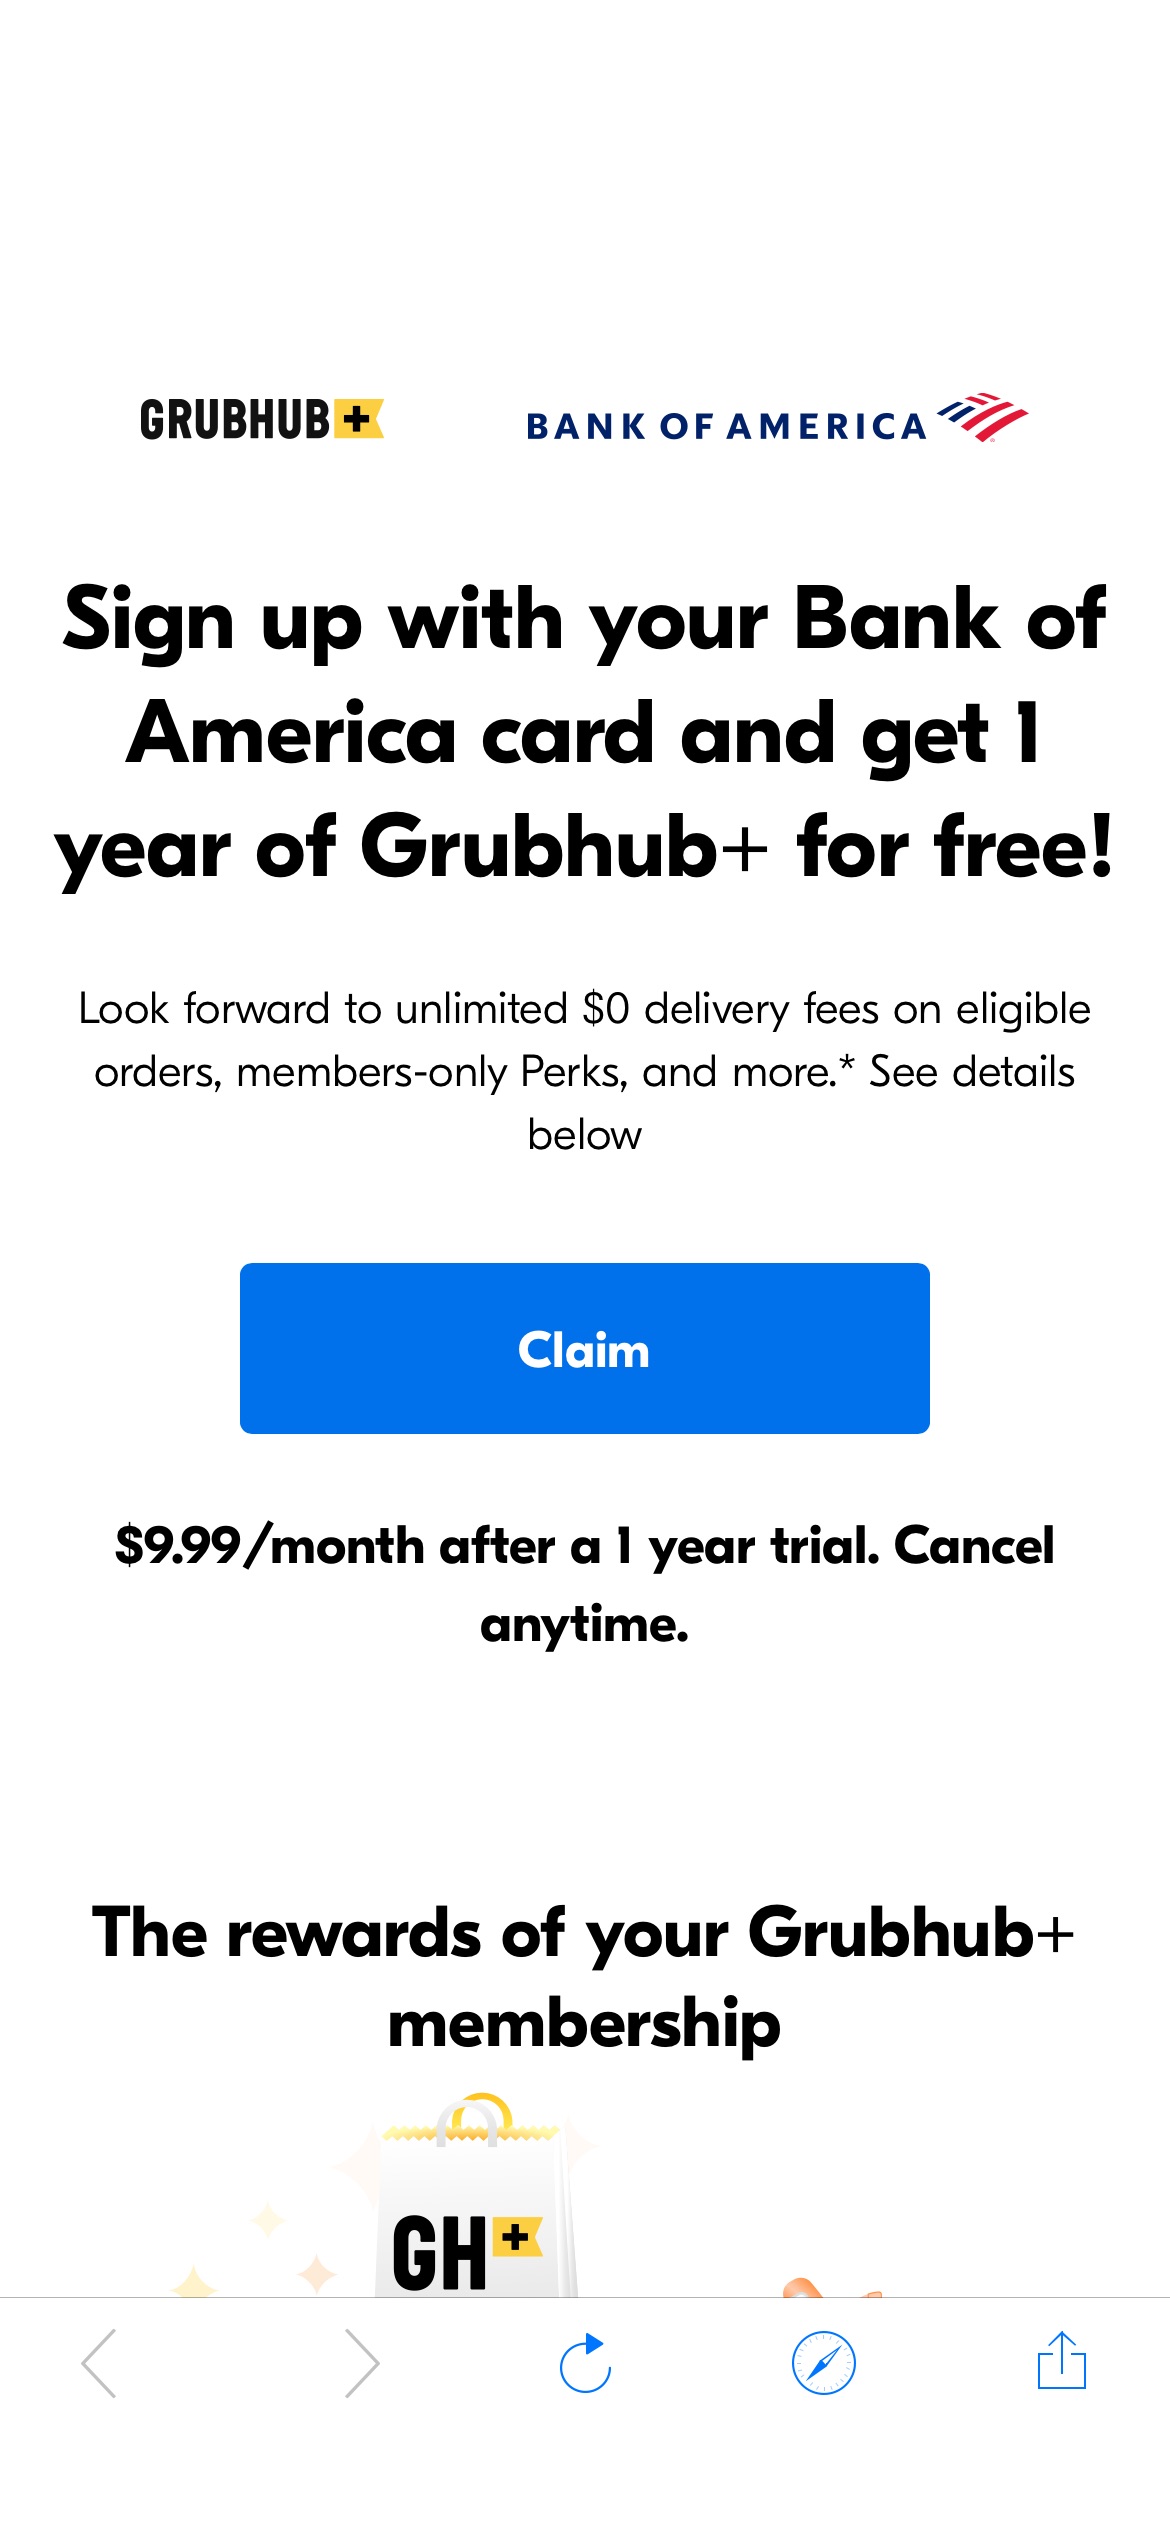 Bank of America Members Get Free Grubhub+ For a Year | Grubhub